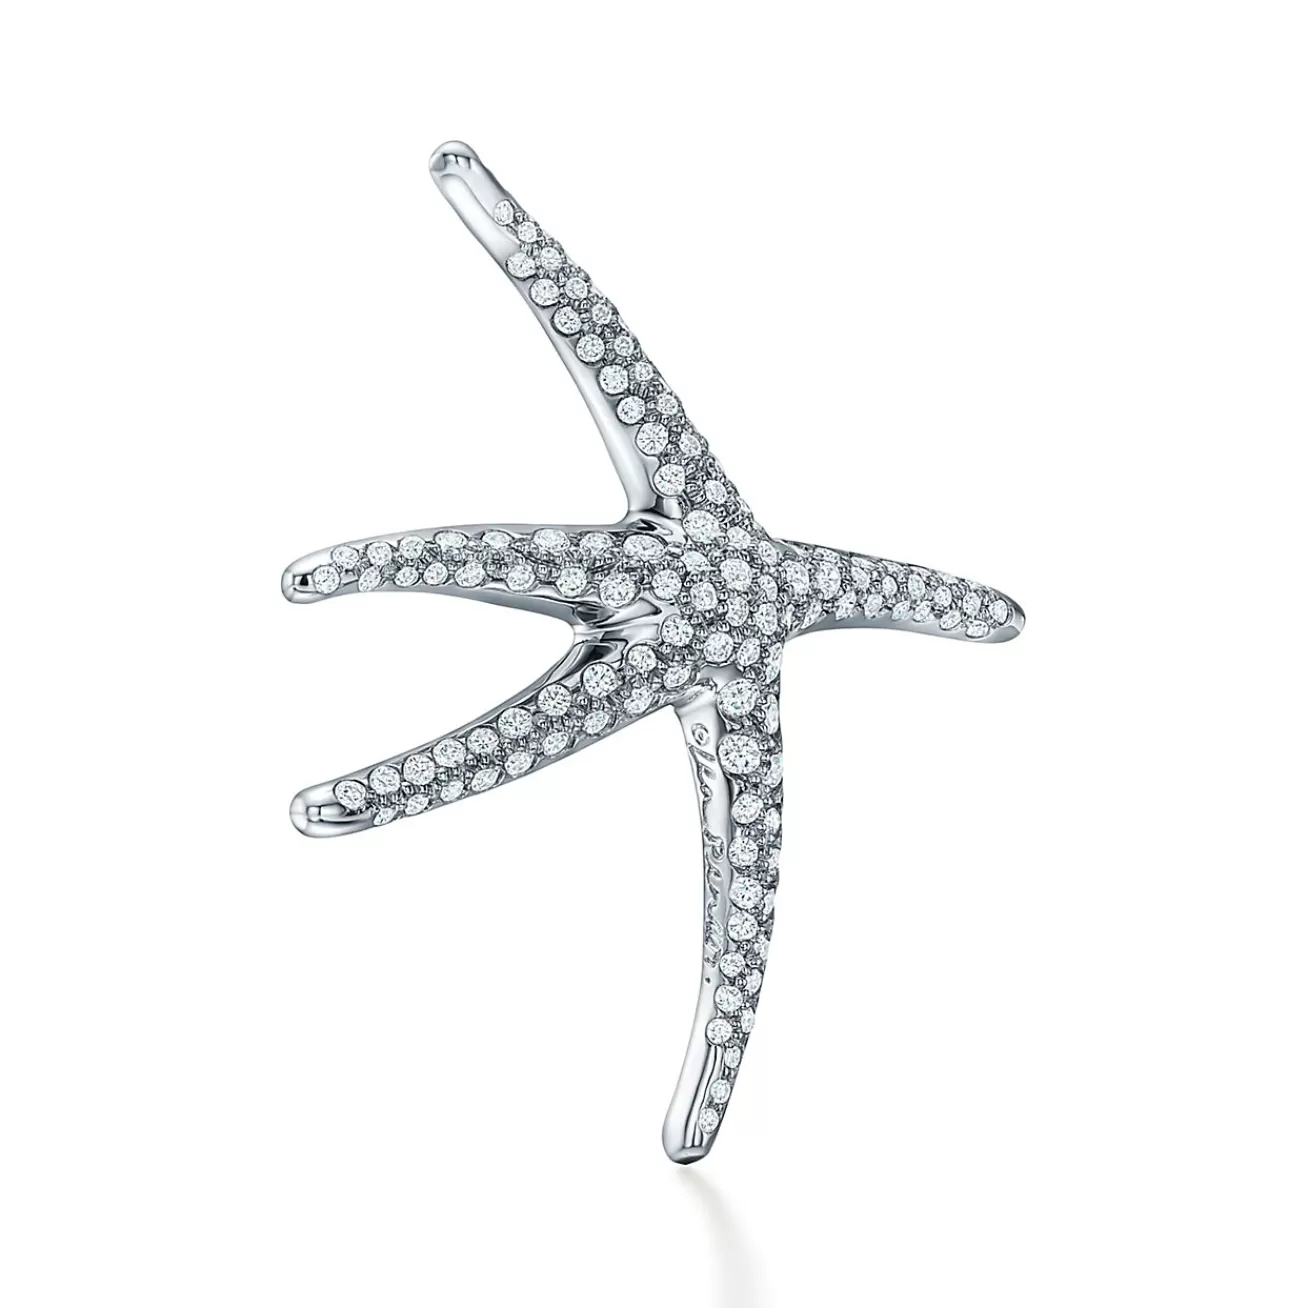 Tiffany & Co. Elsa Peretti® Starfish brooch in platinum with pavé diamonds. | ^ Brooches | Platinum Jewelry